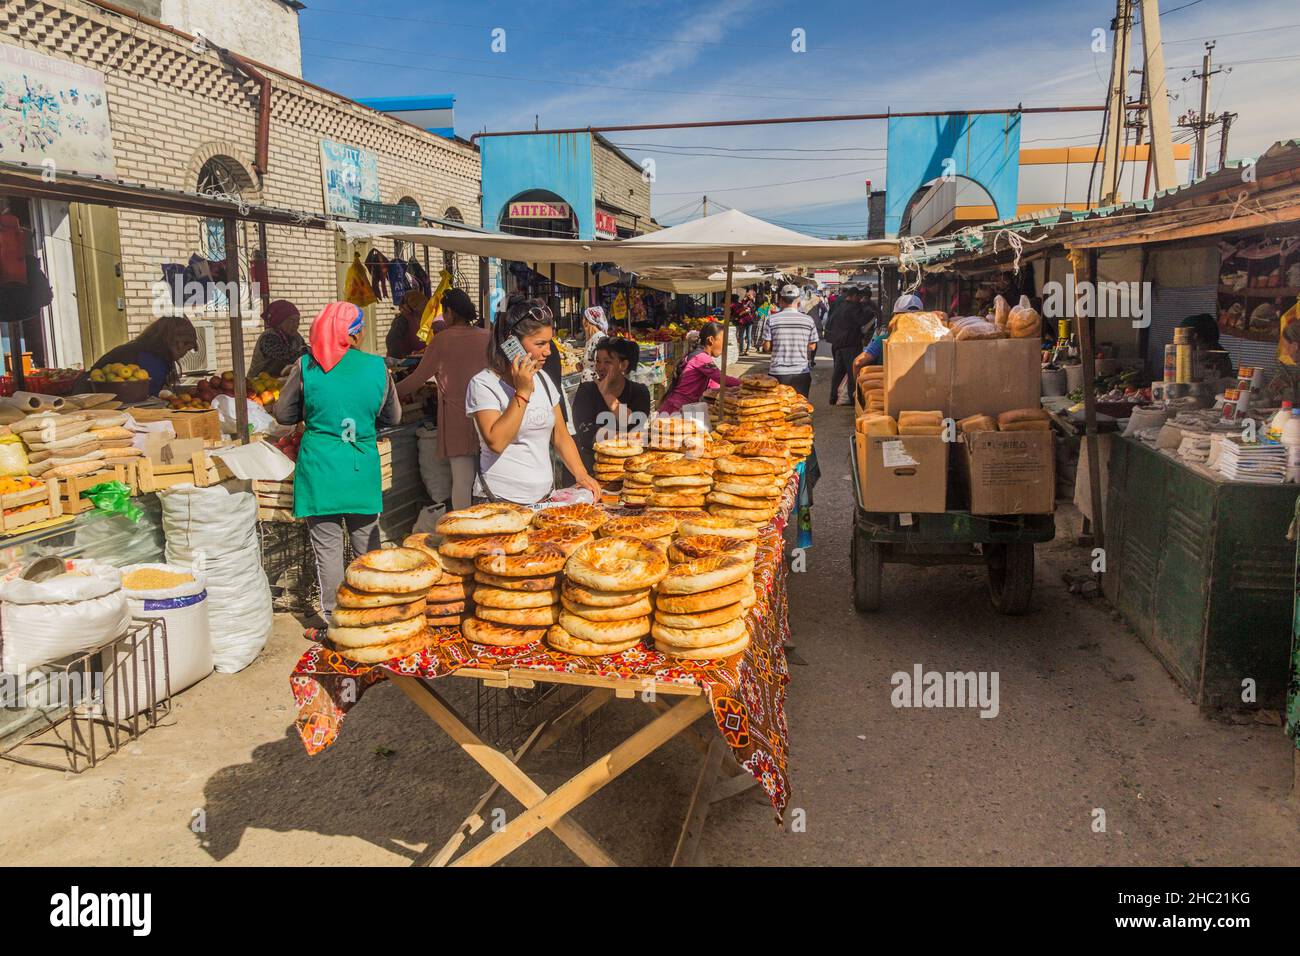 TURKISTAN, KAZAKHSTAN - MAY 31, 2018: Bread and fruit sellers at the bazaar in Turkistan, Kazakhstan Stock Photo